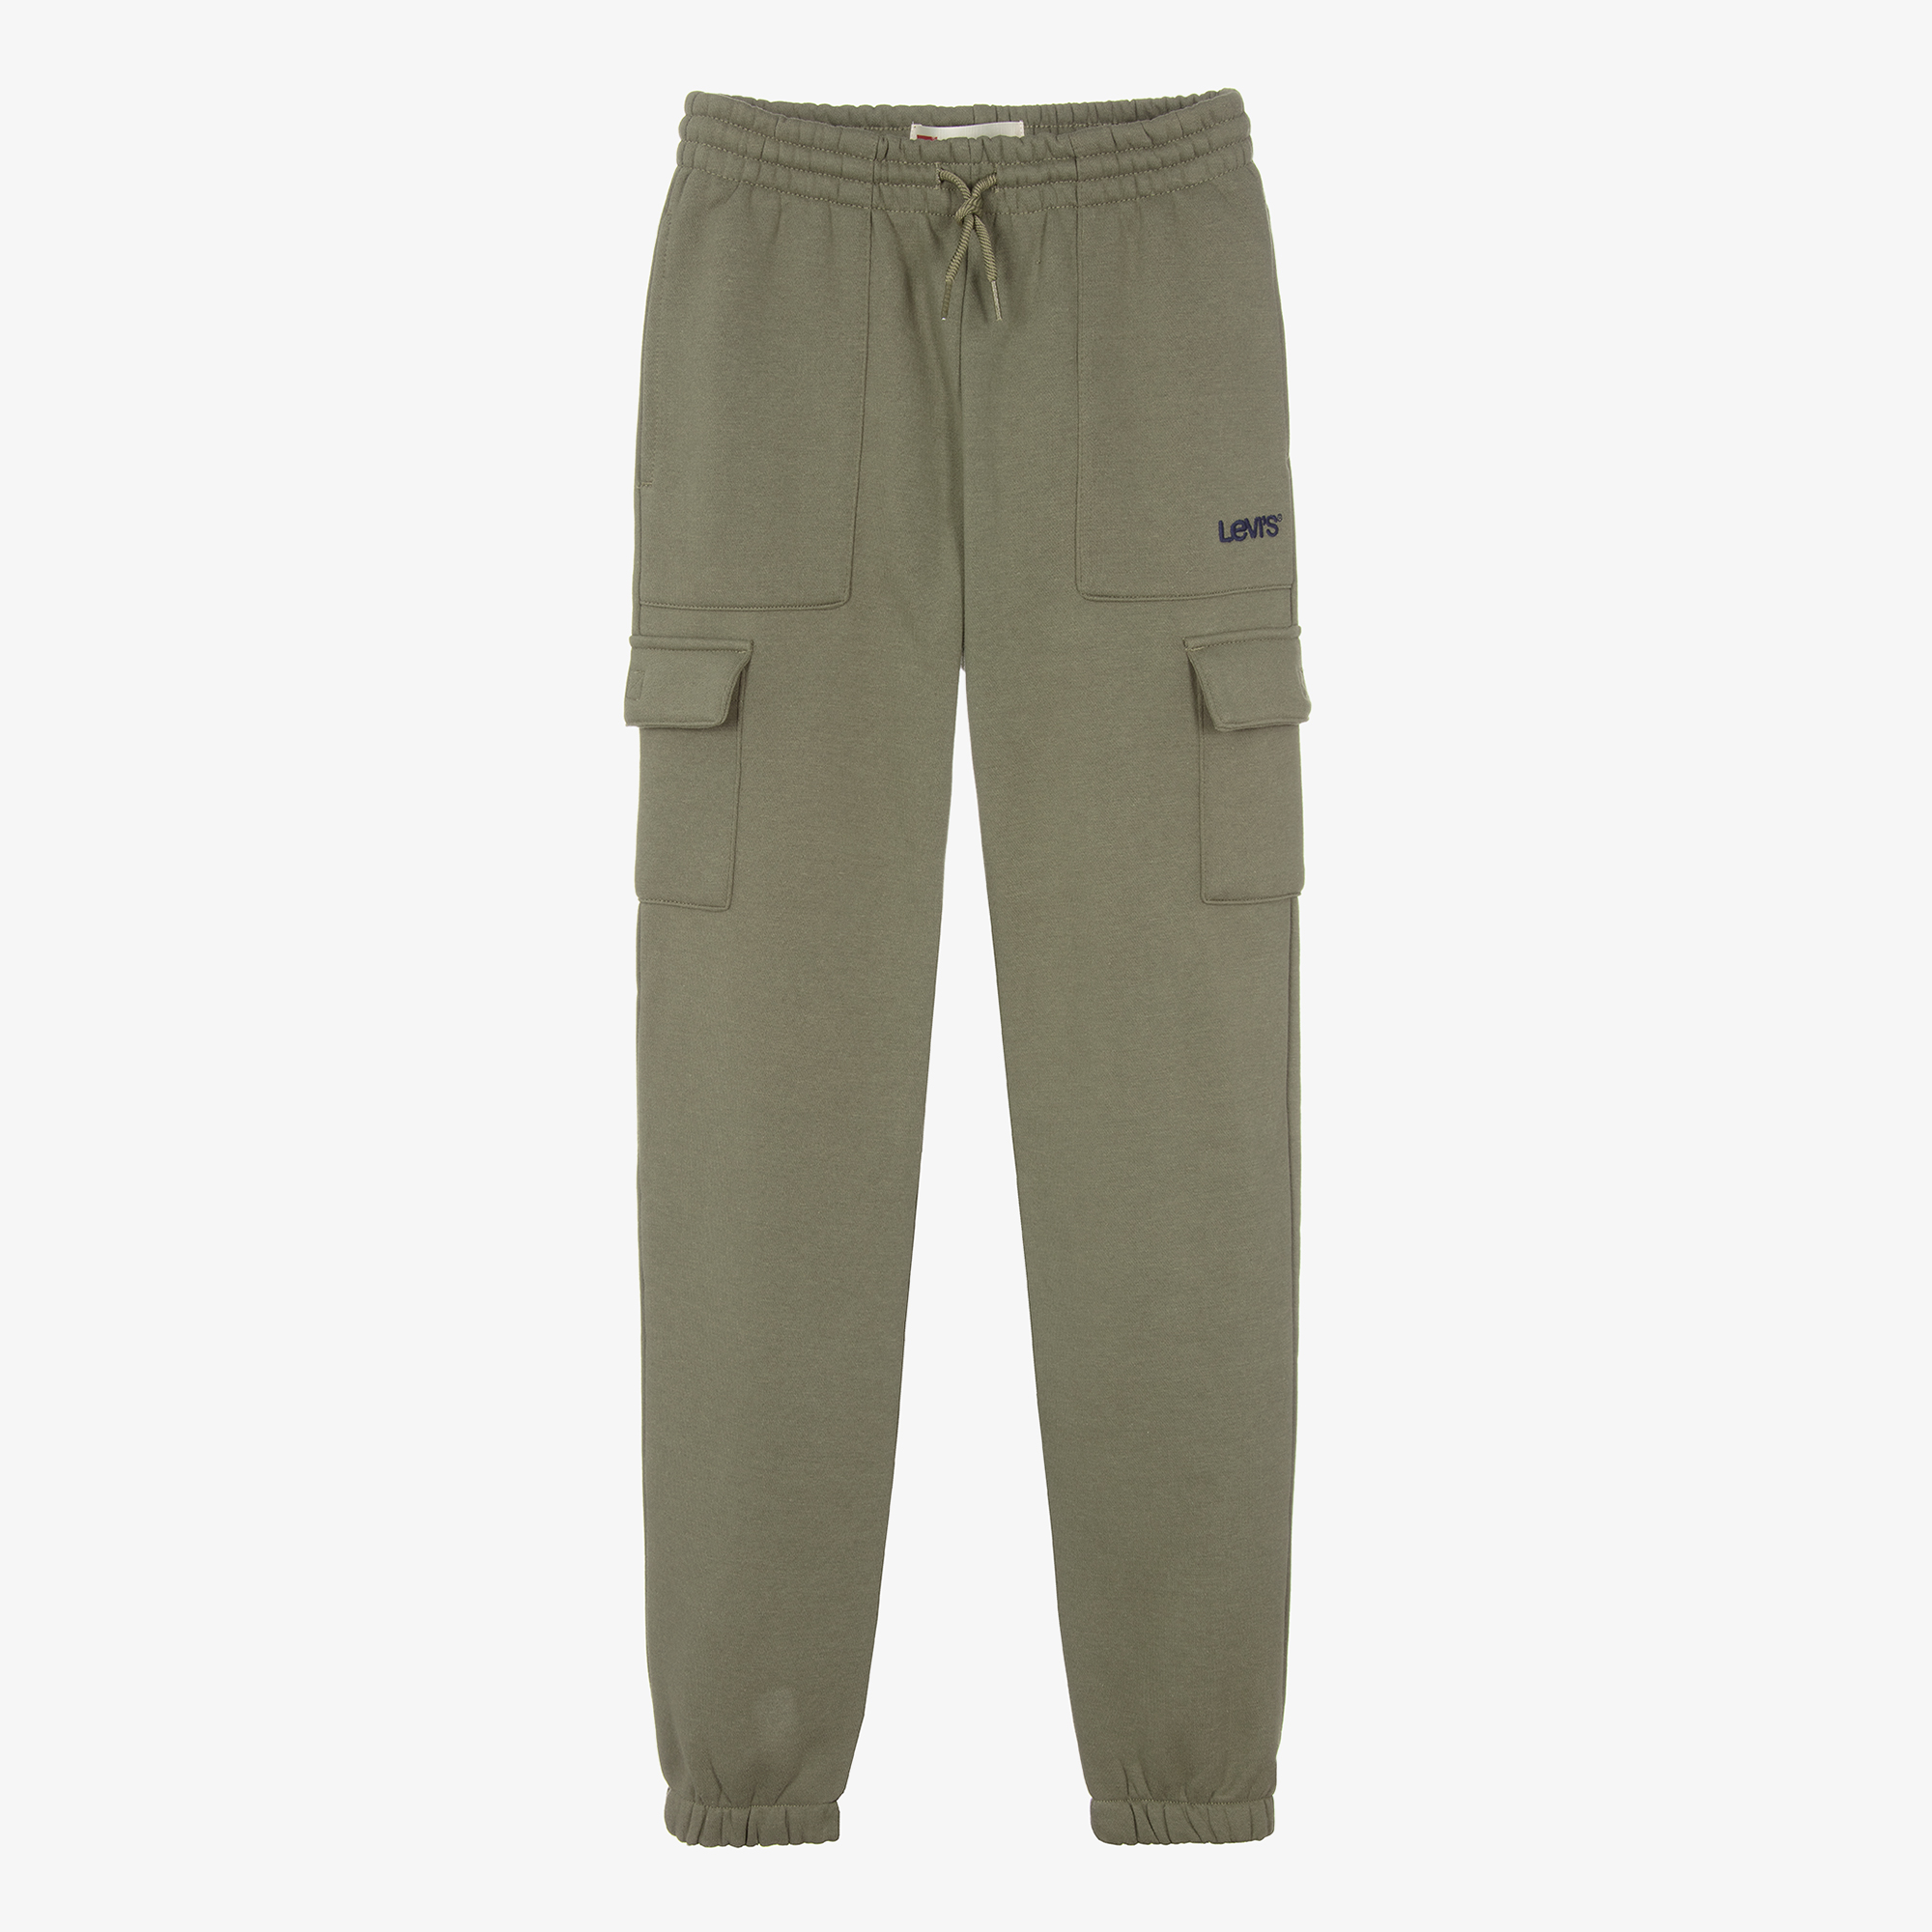 Levi's | Pants | Levi Strauss Mens Khaki Cargo Pants 4x32 | Poshmark